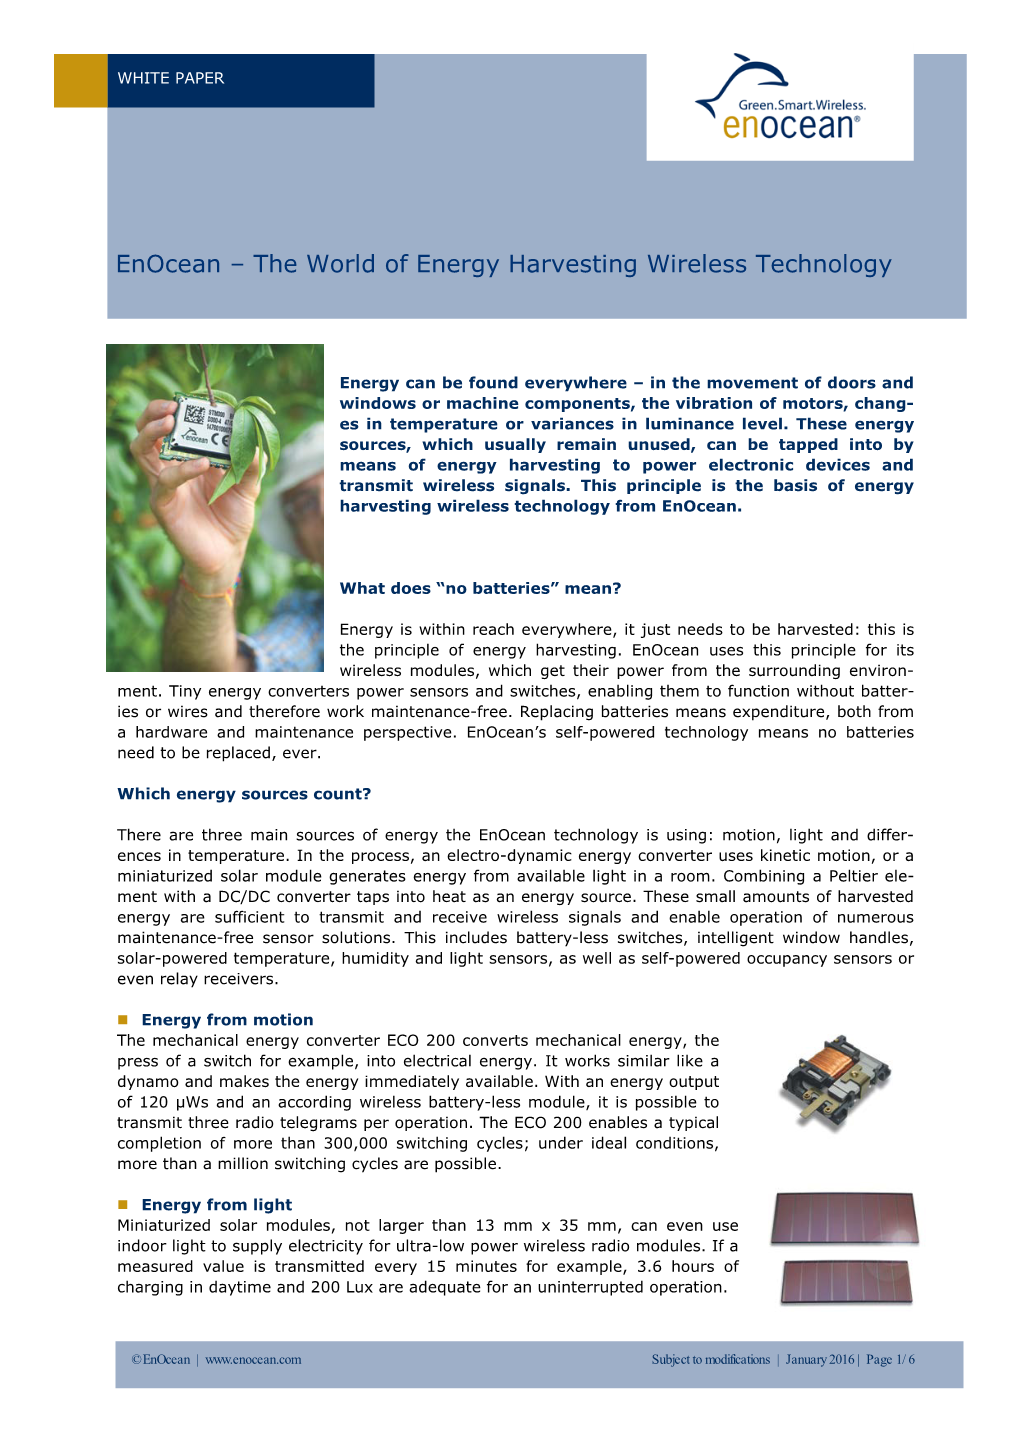 The World of Energy Harvesting Wireless Technology